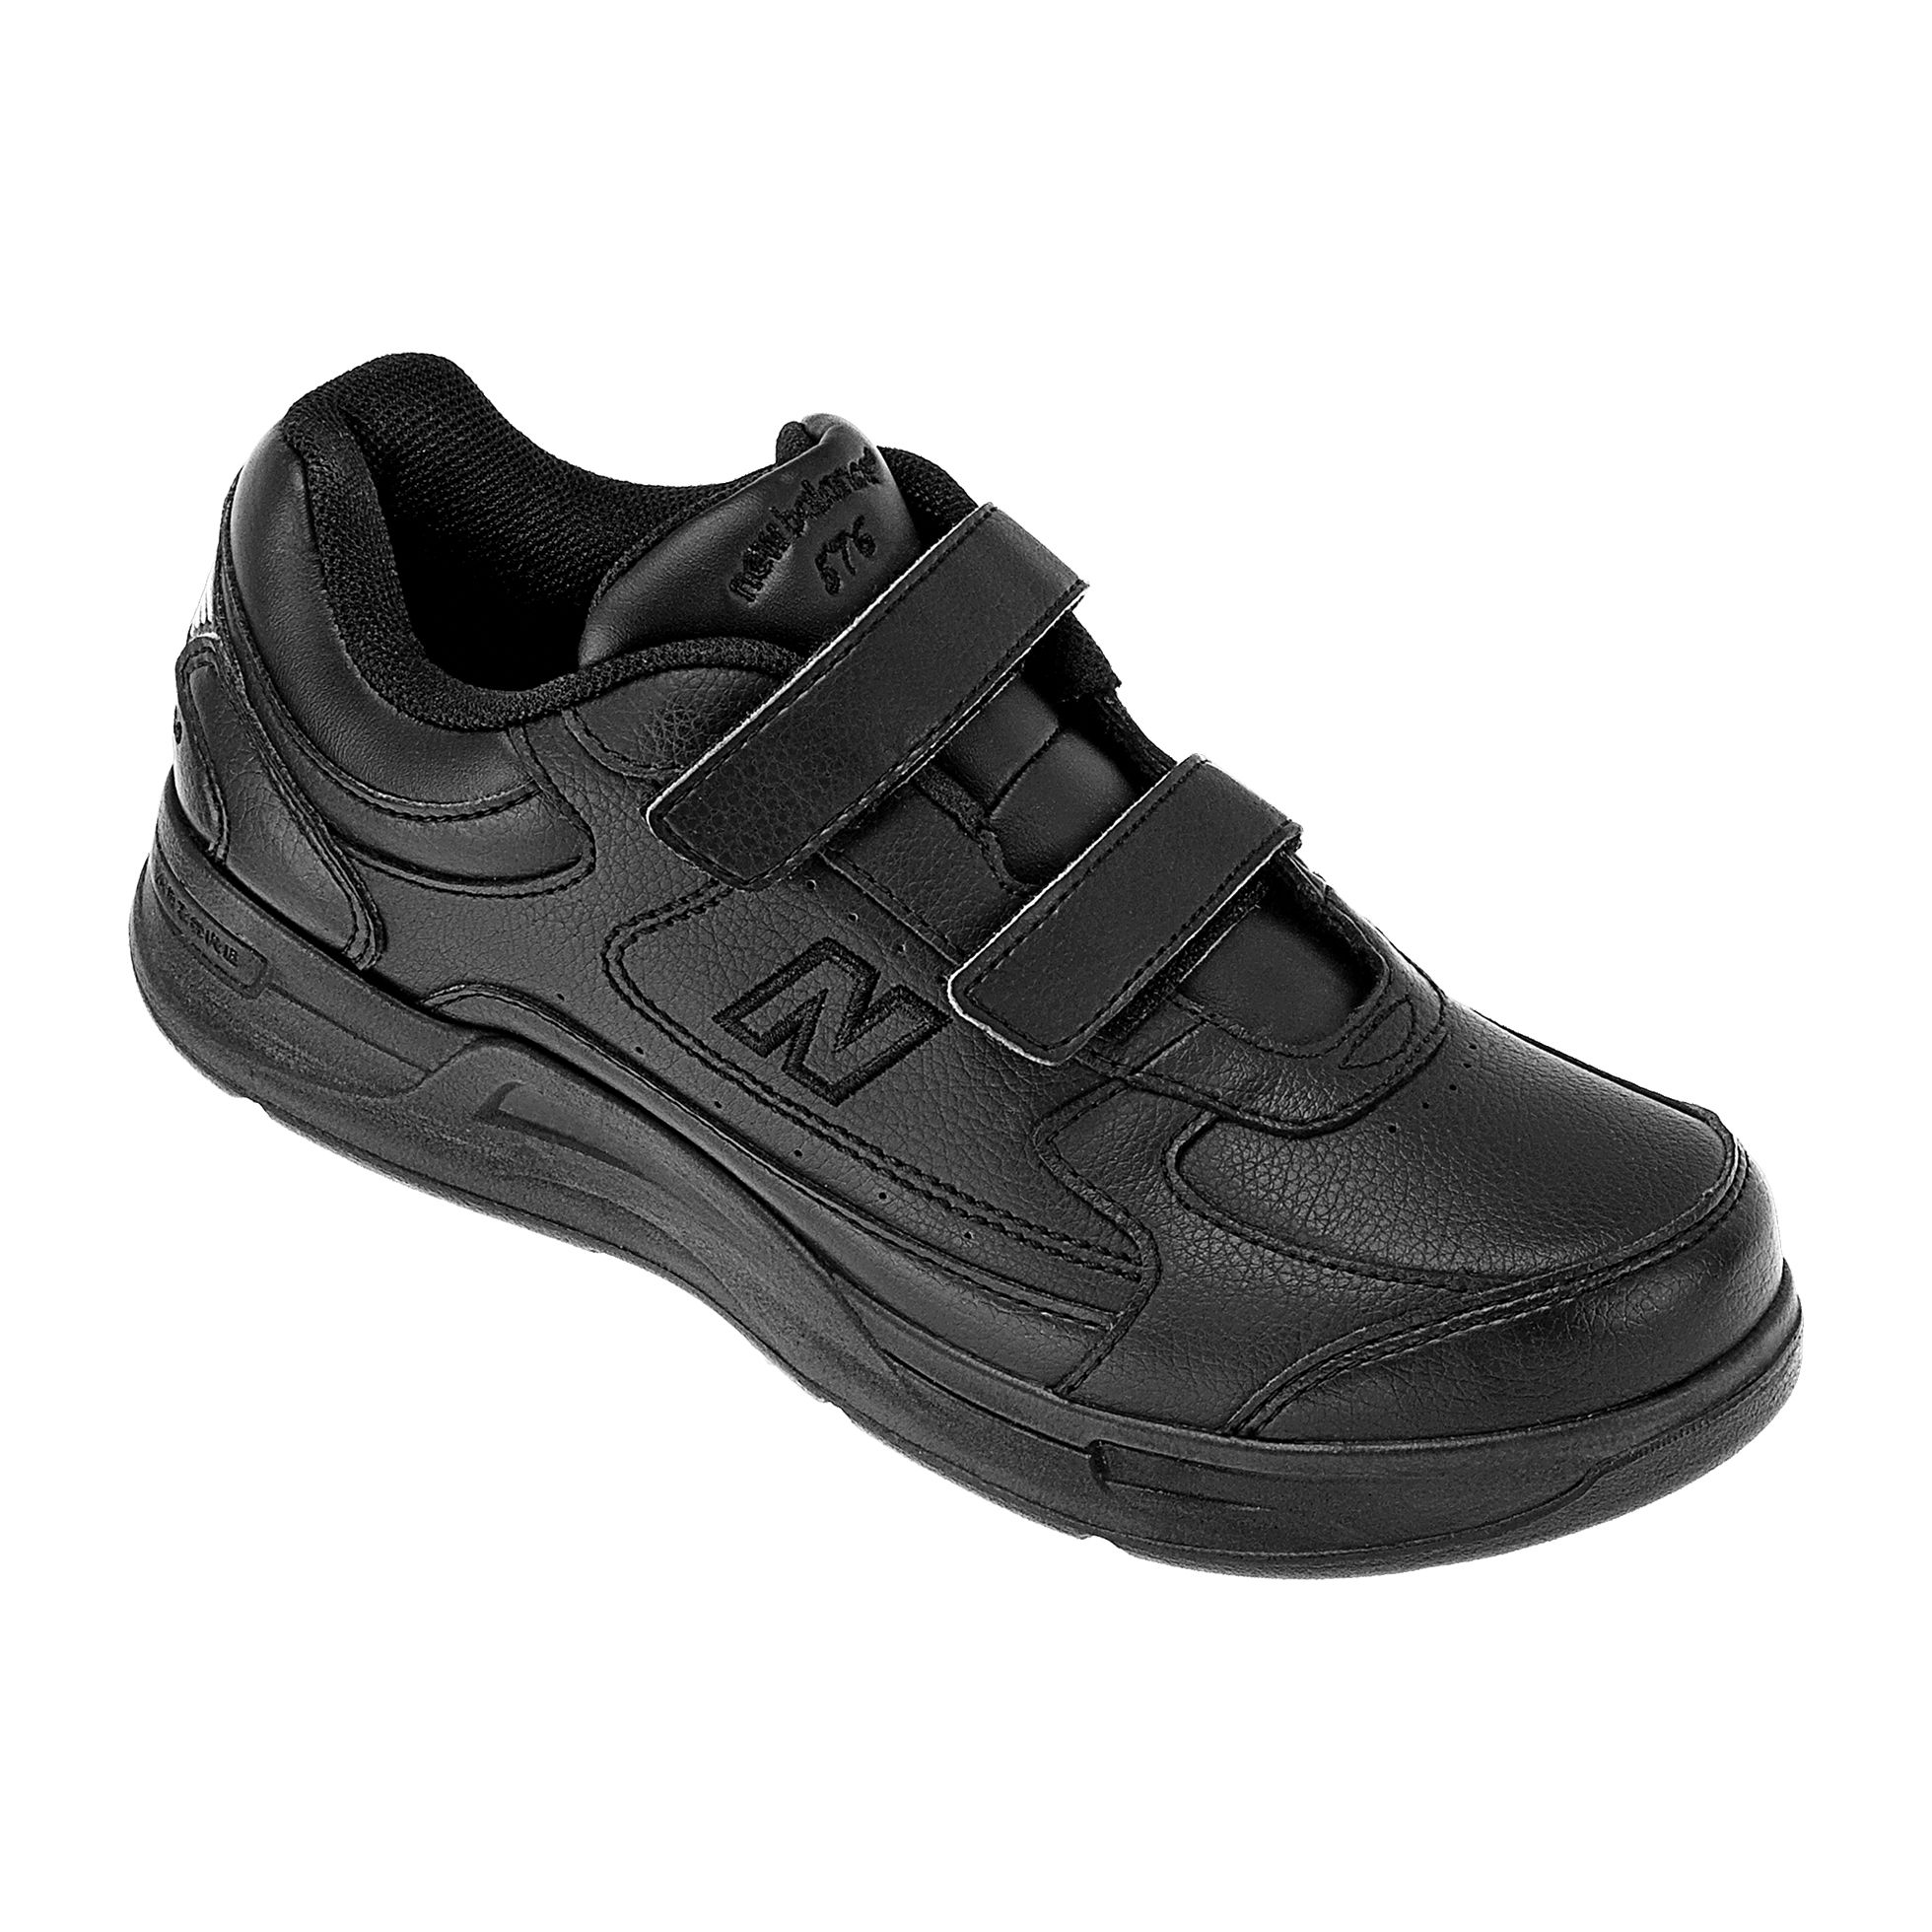 New Balance Men's Walking Athletic Shoe - Black